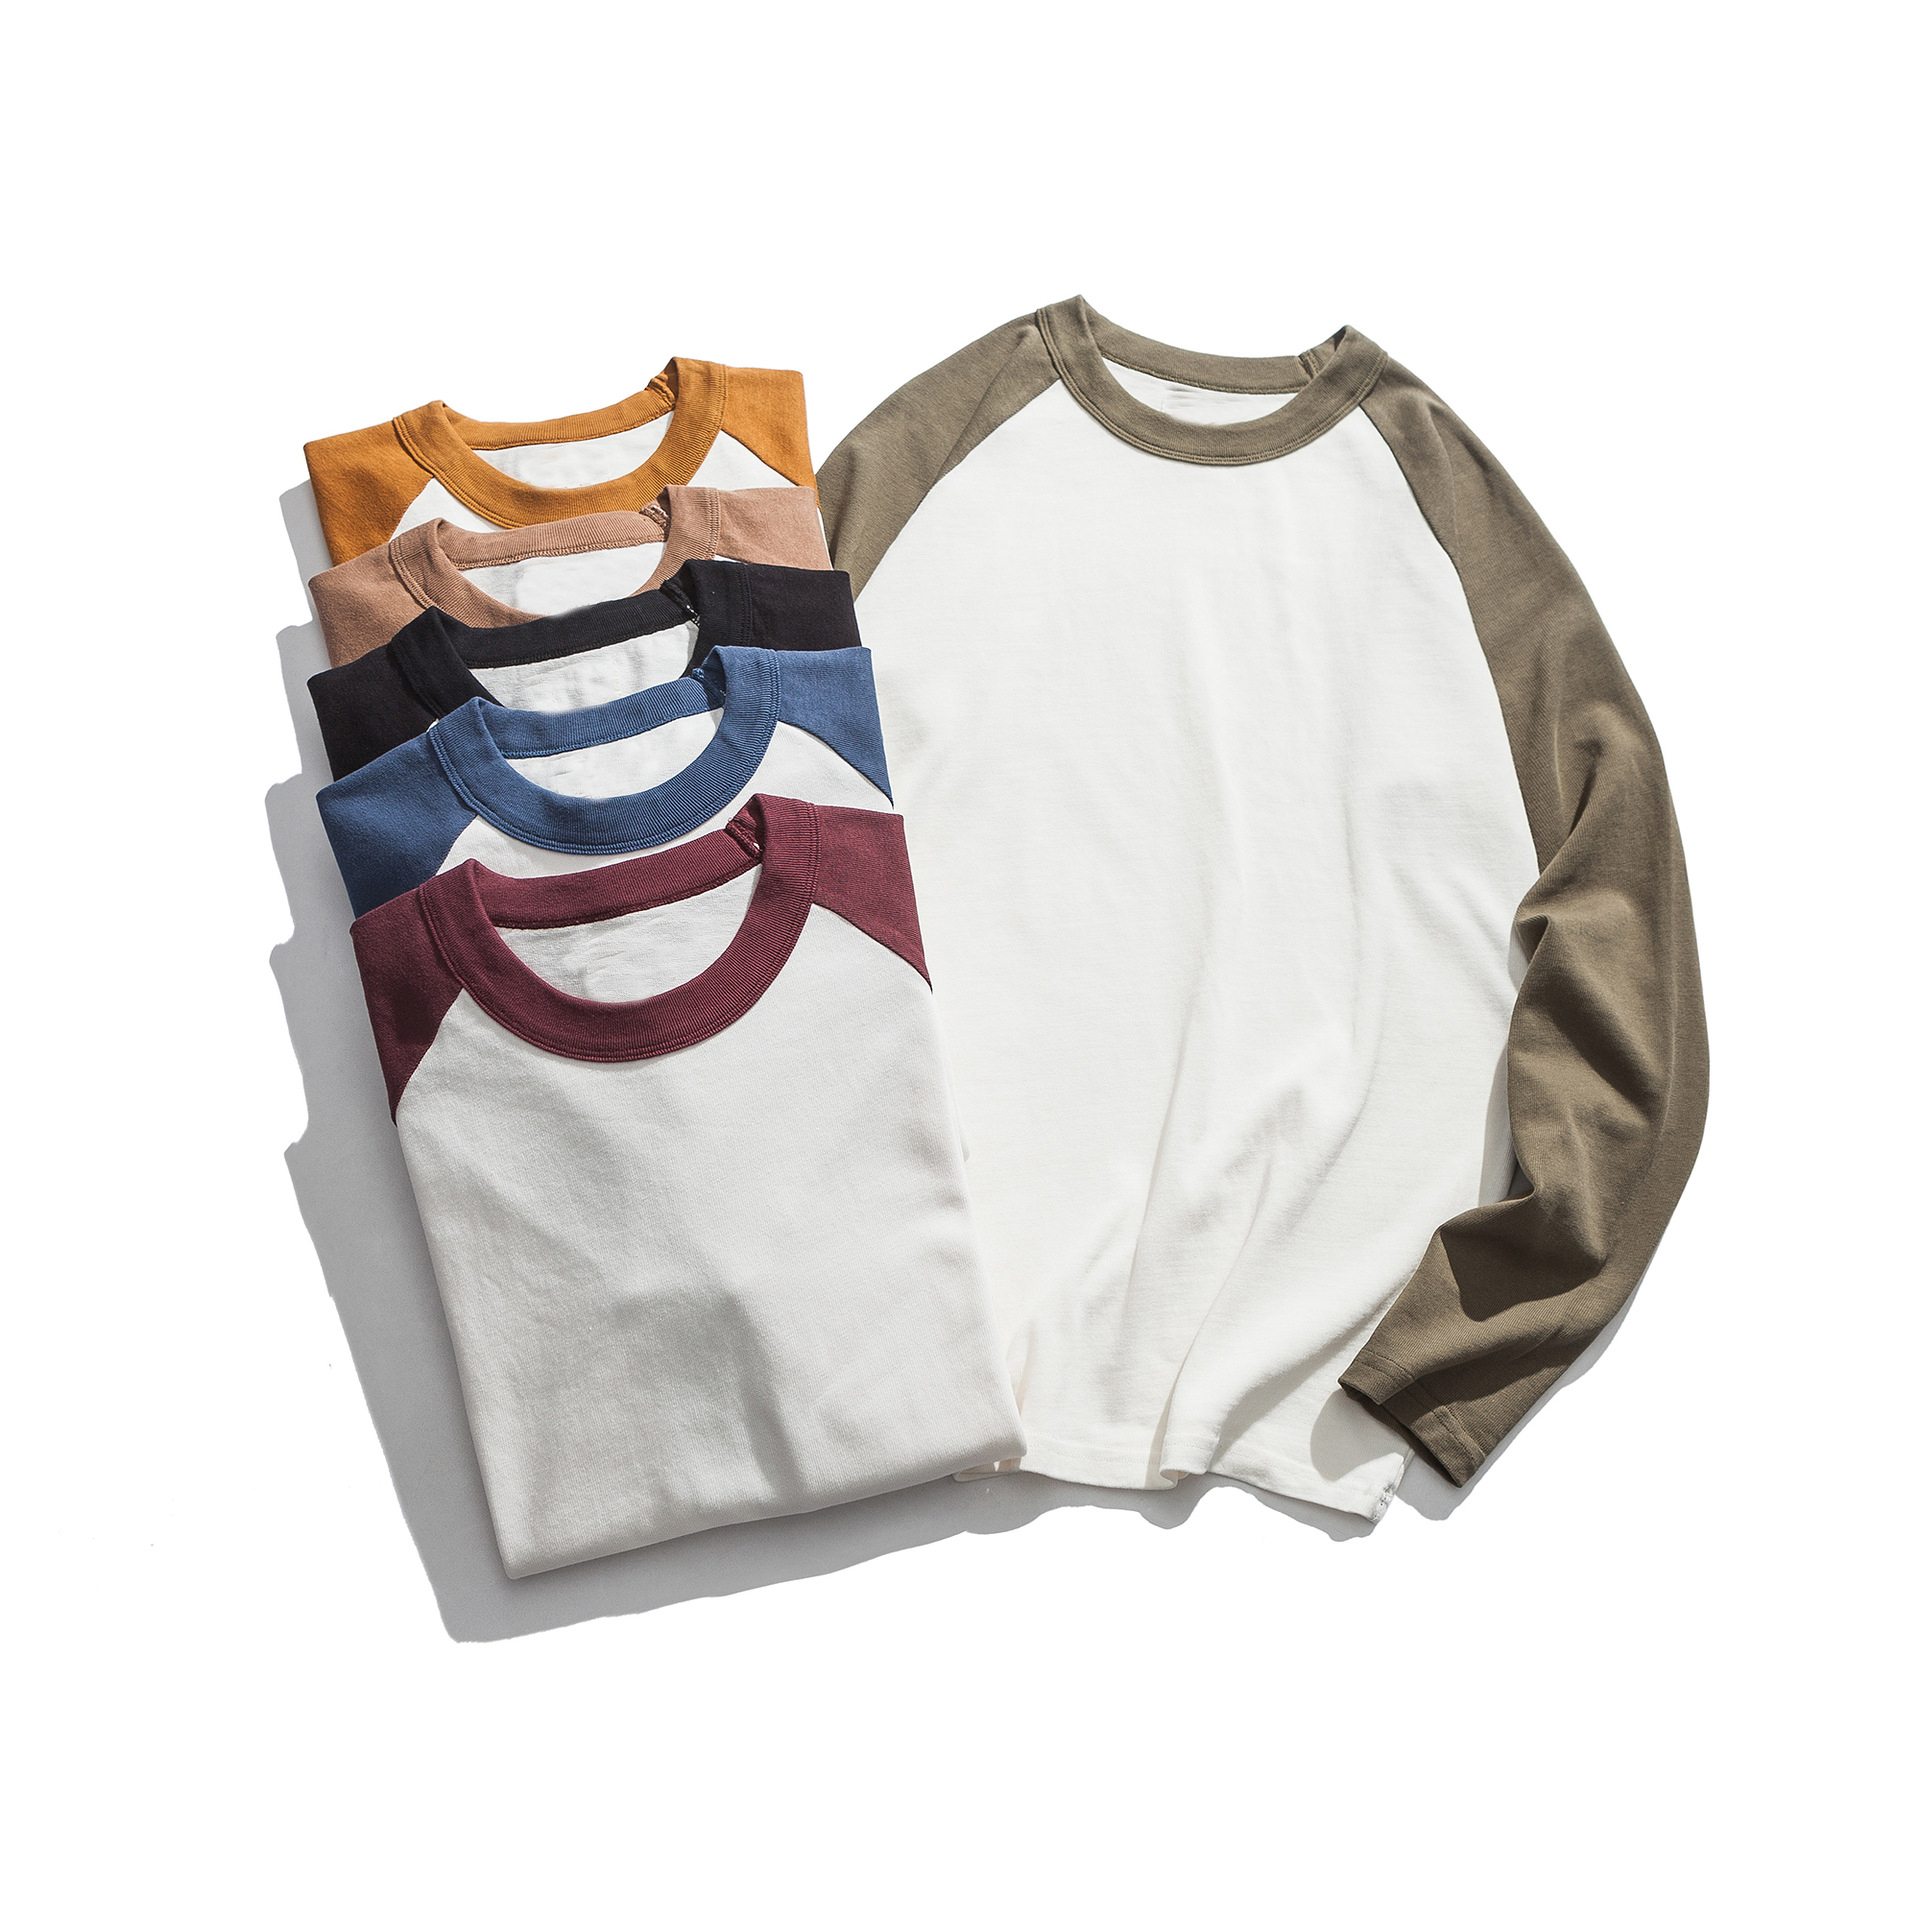 PriceList for Marvel Jacket - 100% cotton plain long sleeve t-shirt or custom embroidery logo t-shirt – Gift